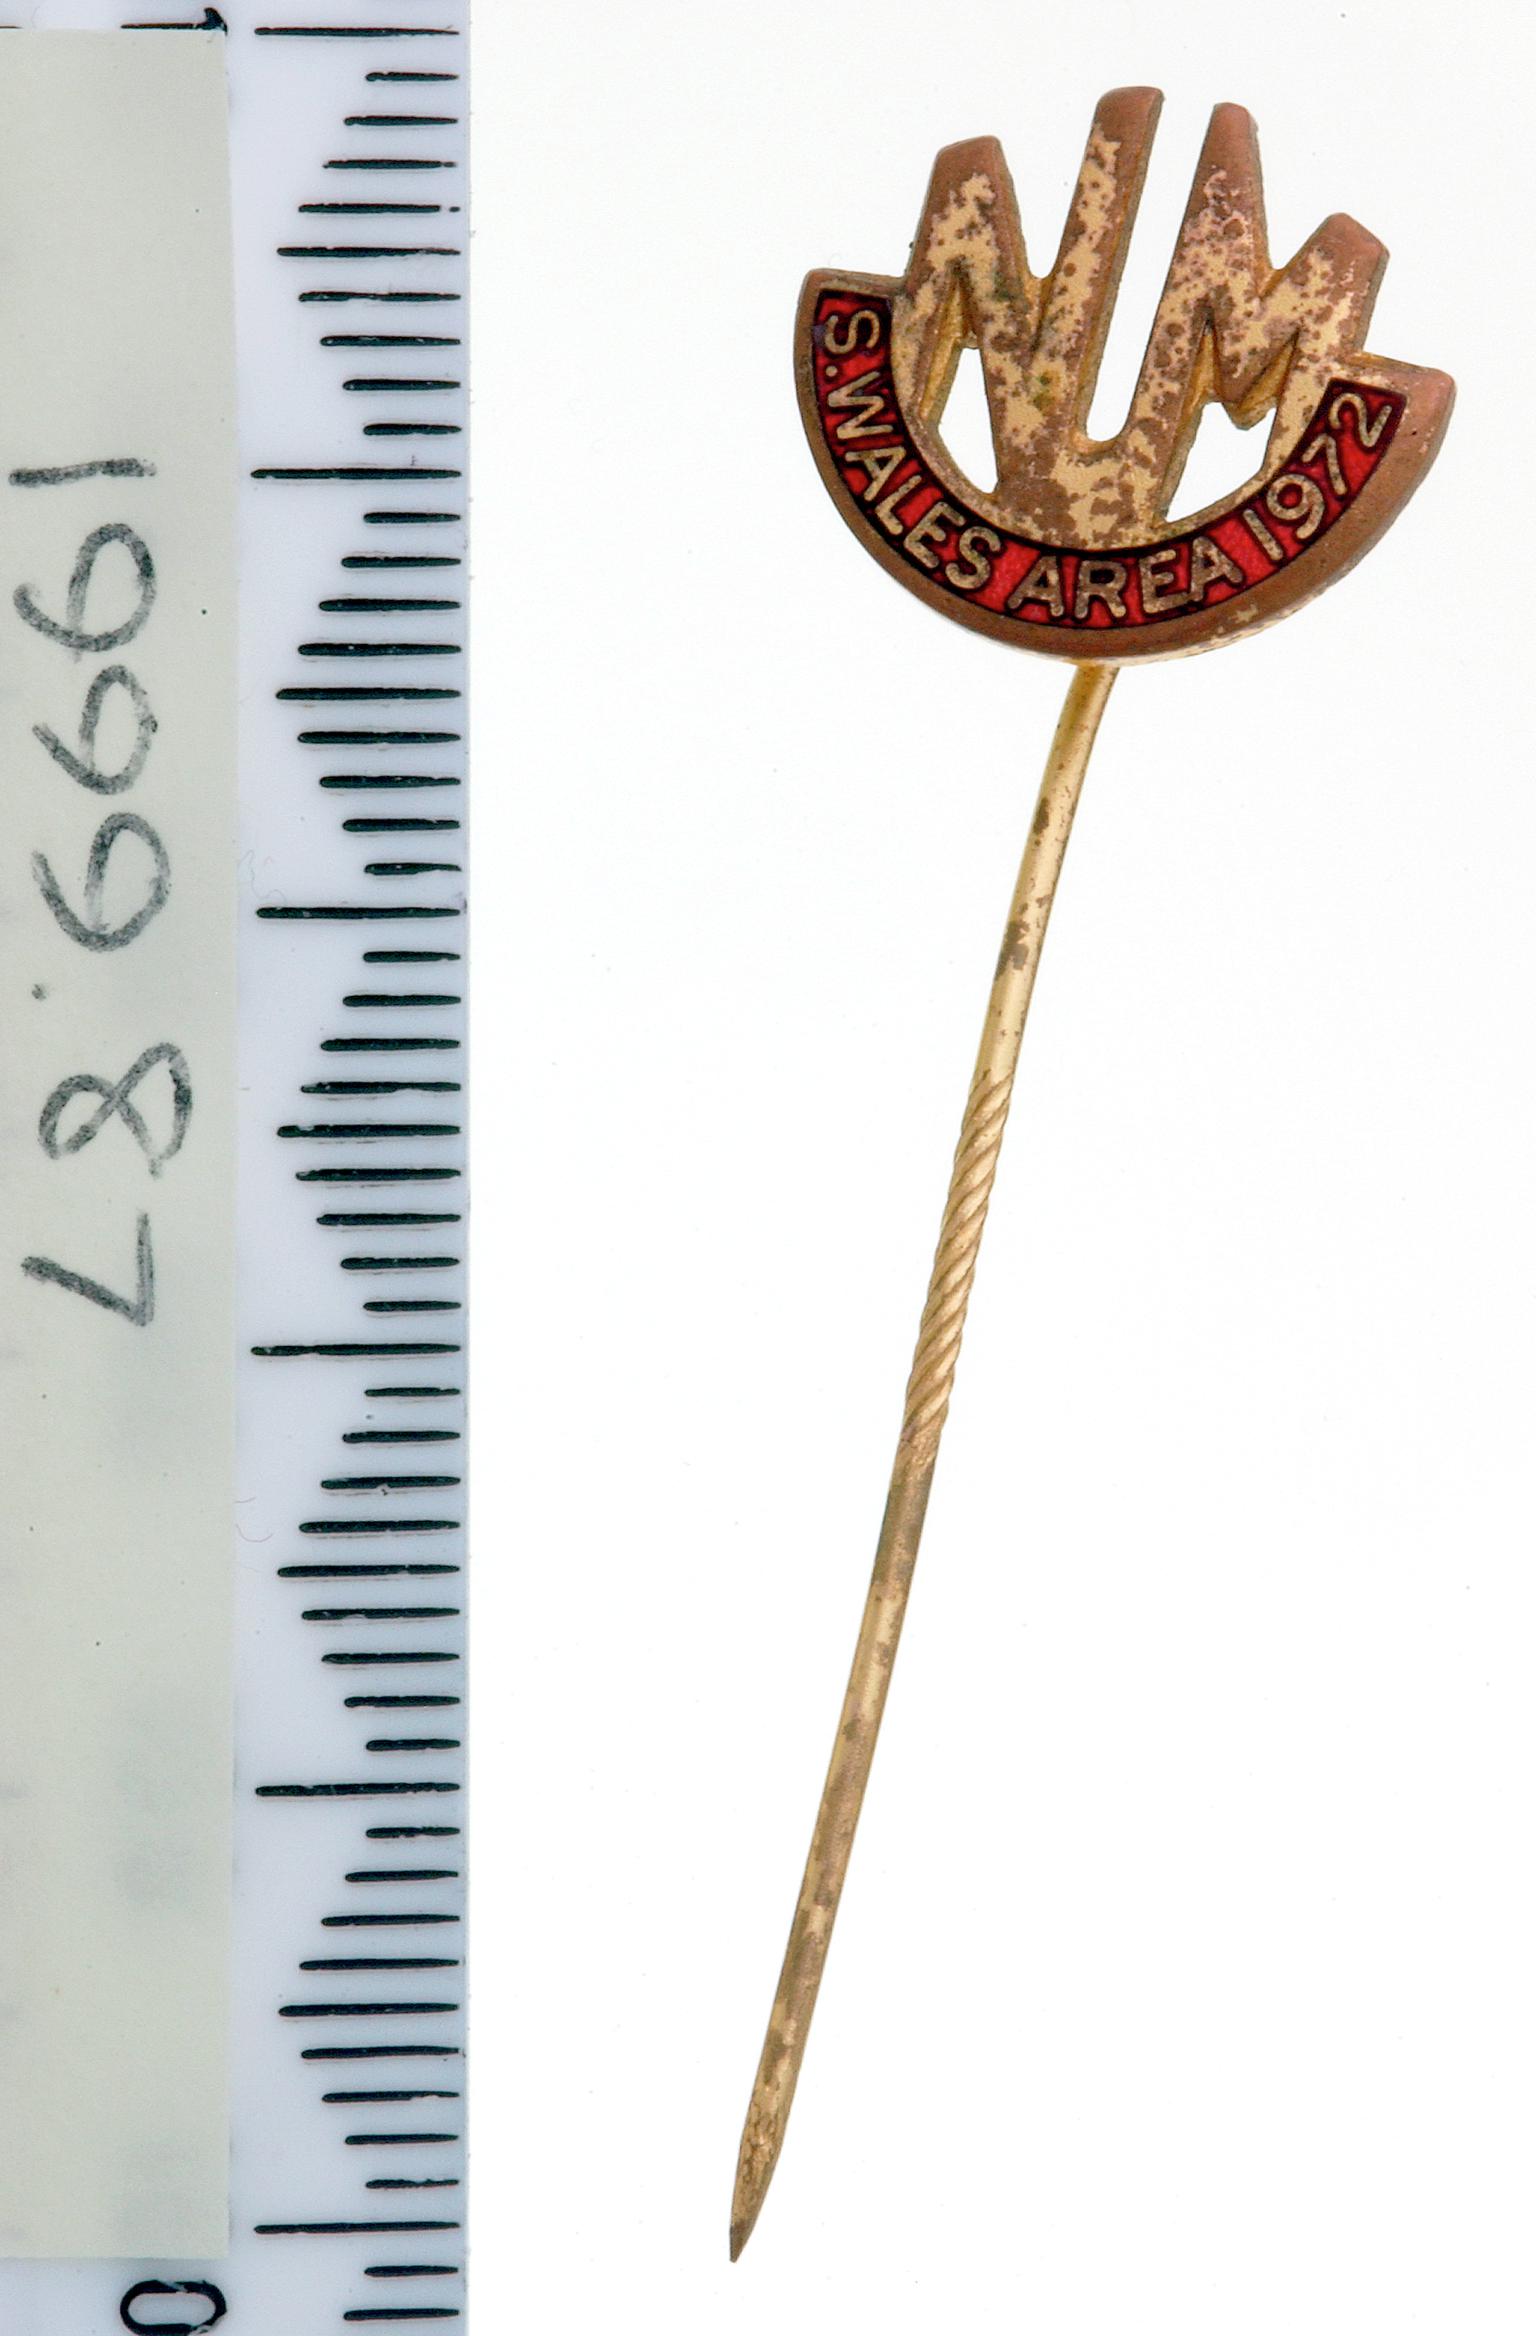 N.U.M. South Wales Area 1972, pin badge